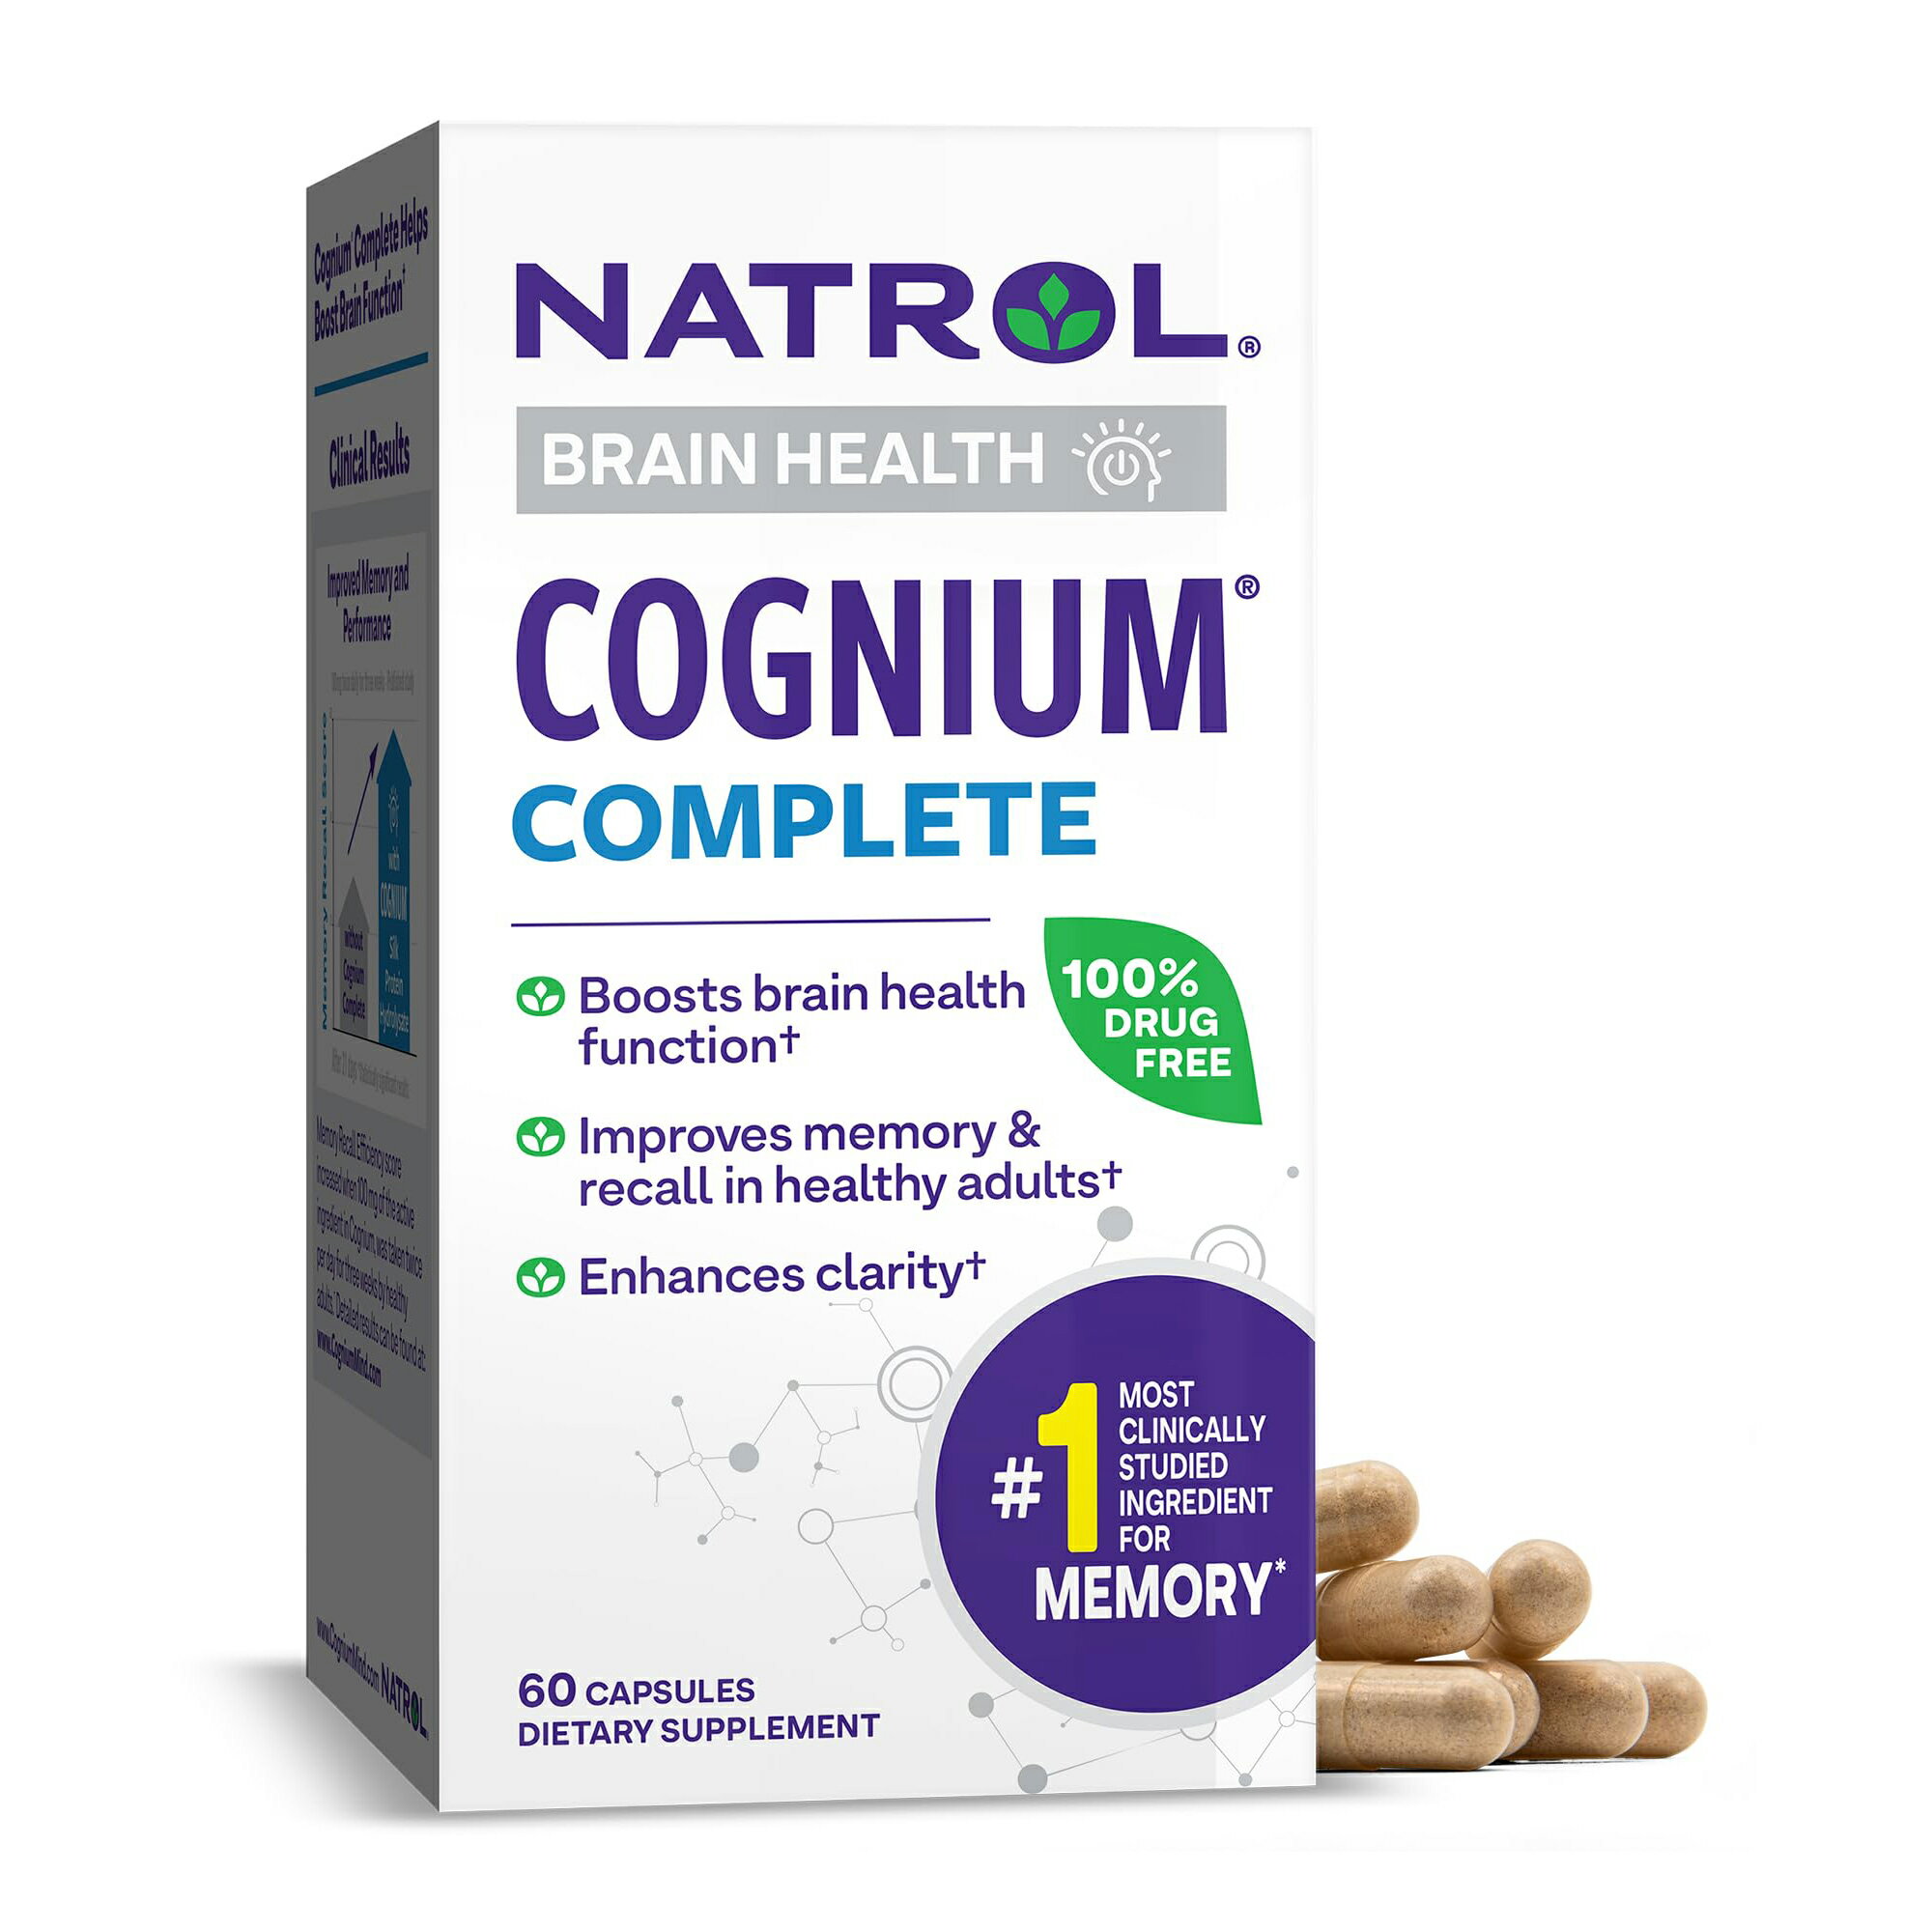 Natrol Cognium Complete, Brain Health, Improves Memory & Clarity, Drug Free, 100mg, 60 Capsules